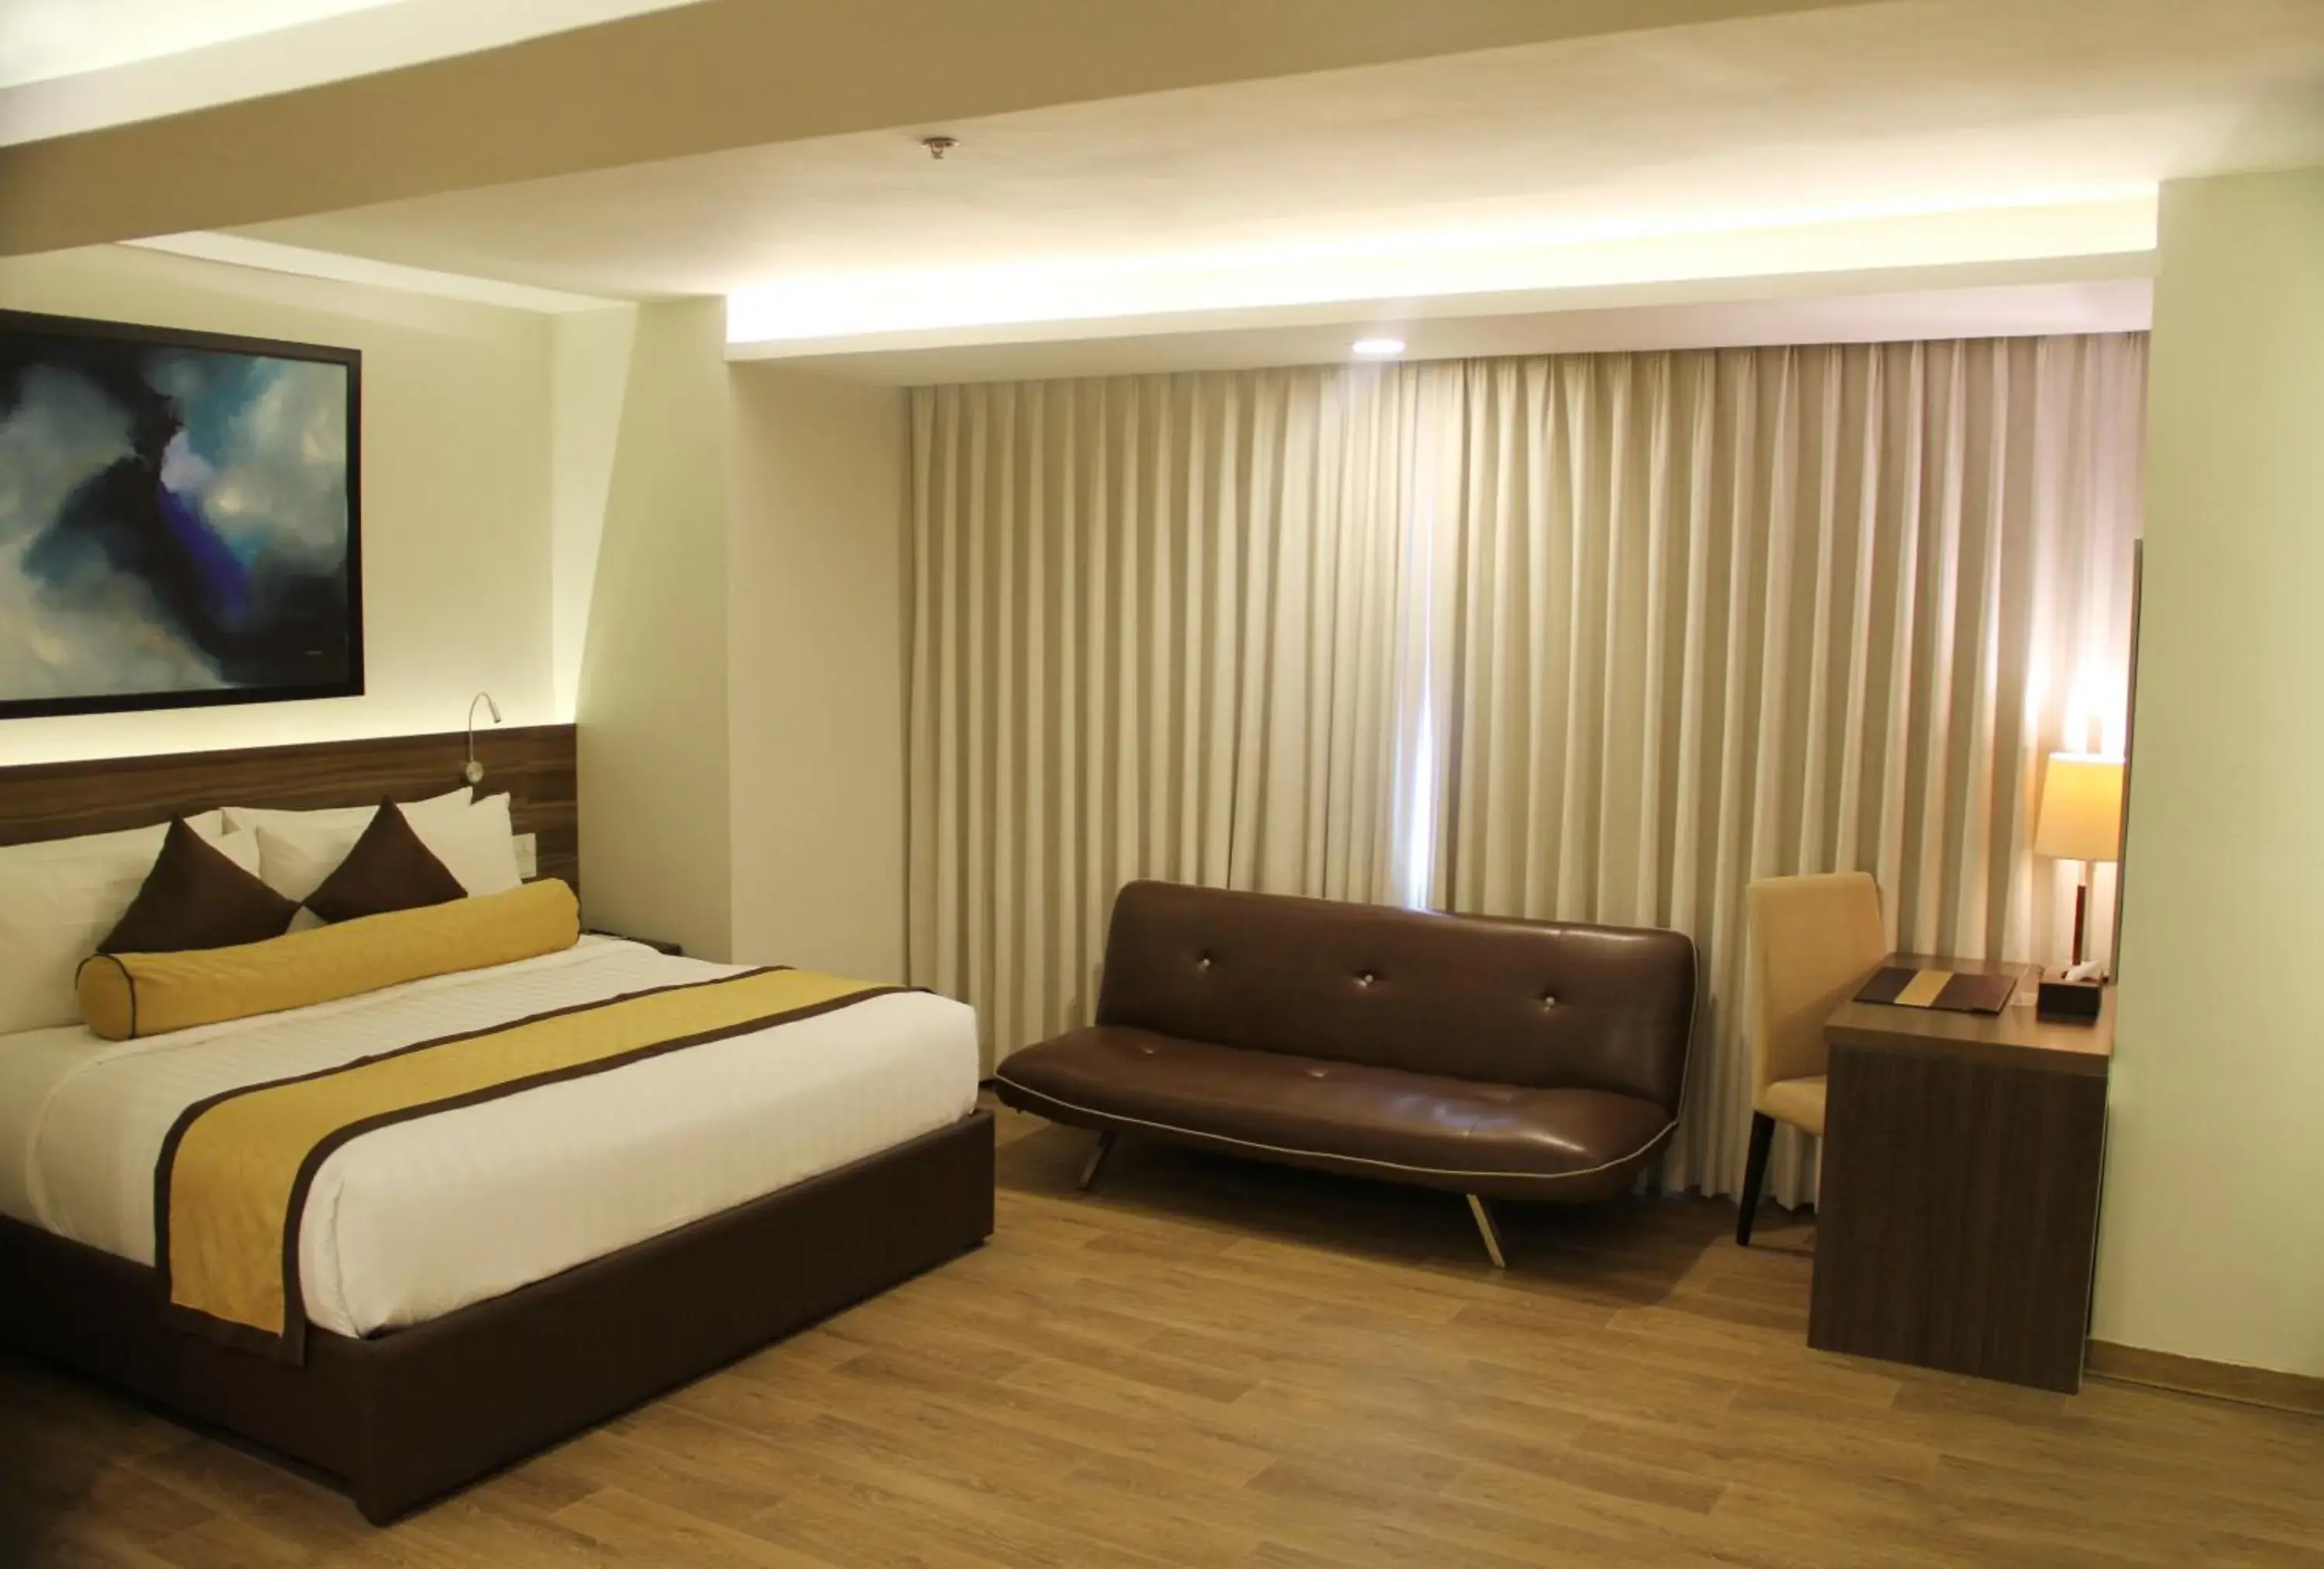 Bedroom in Hotel Marciano